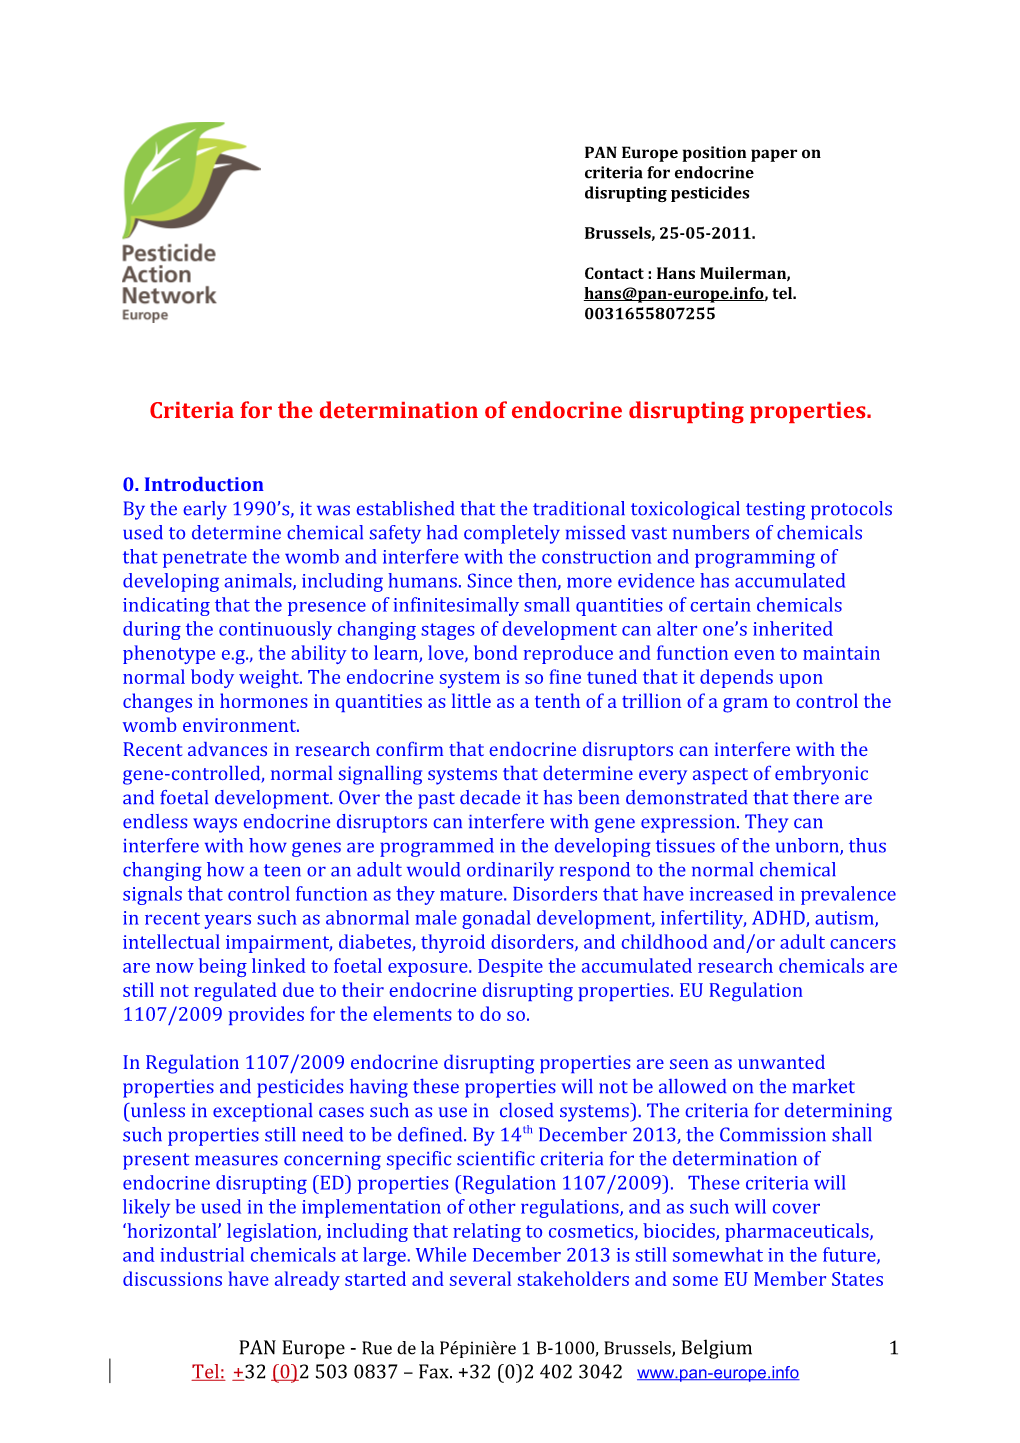 Criteria for the Determination of Endocrine Disrupting Properties